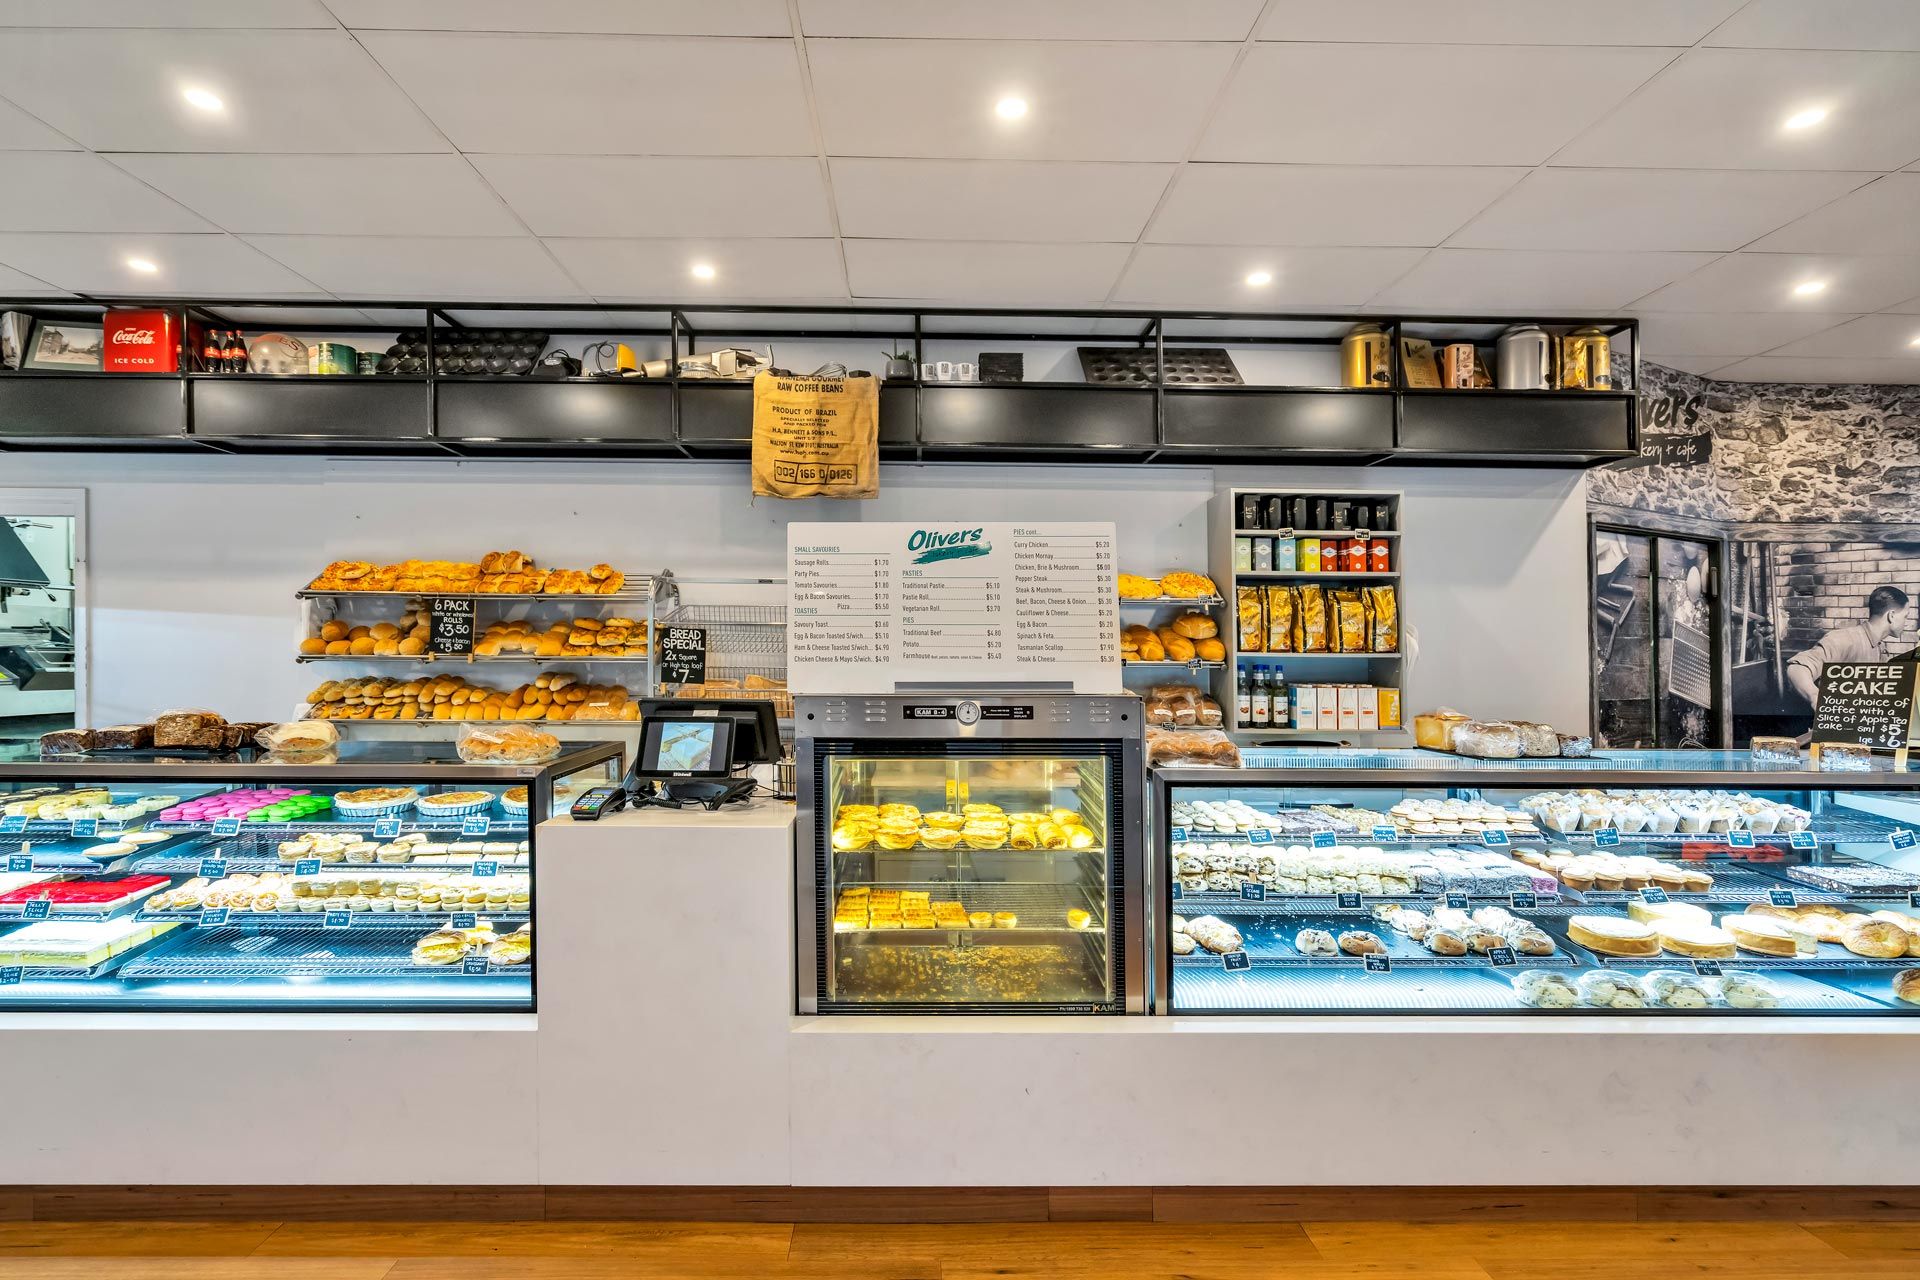 Award winning bakery, café and pie shop in Tasmania